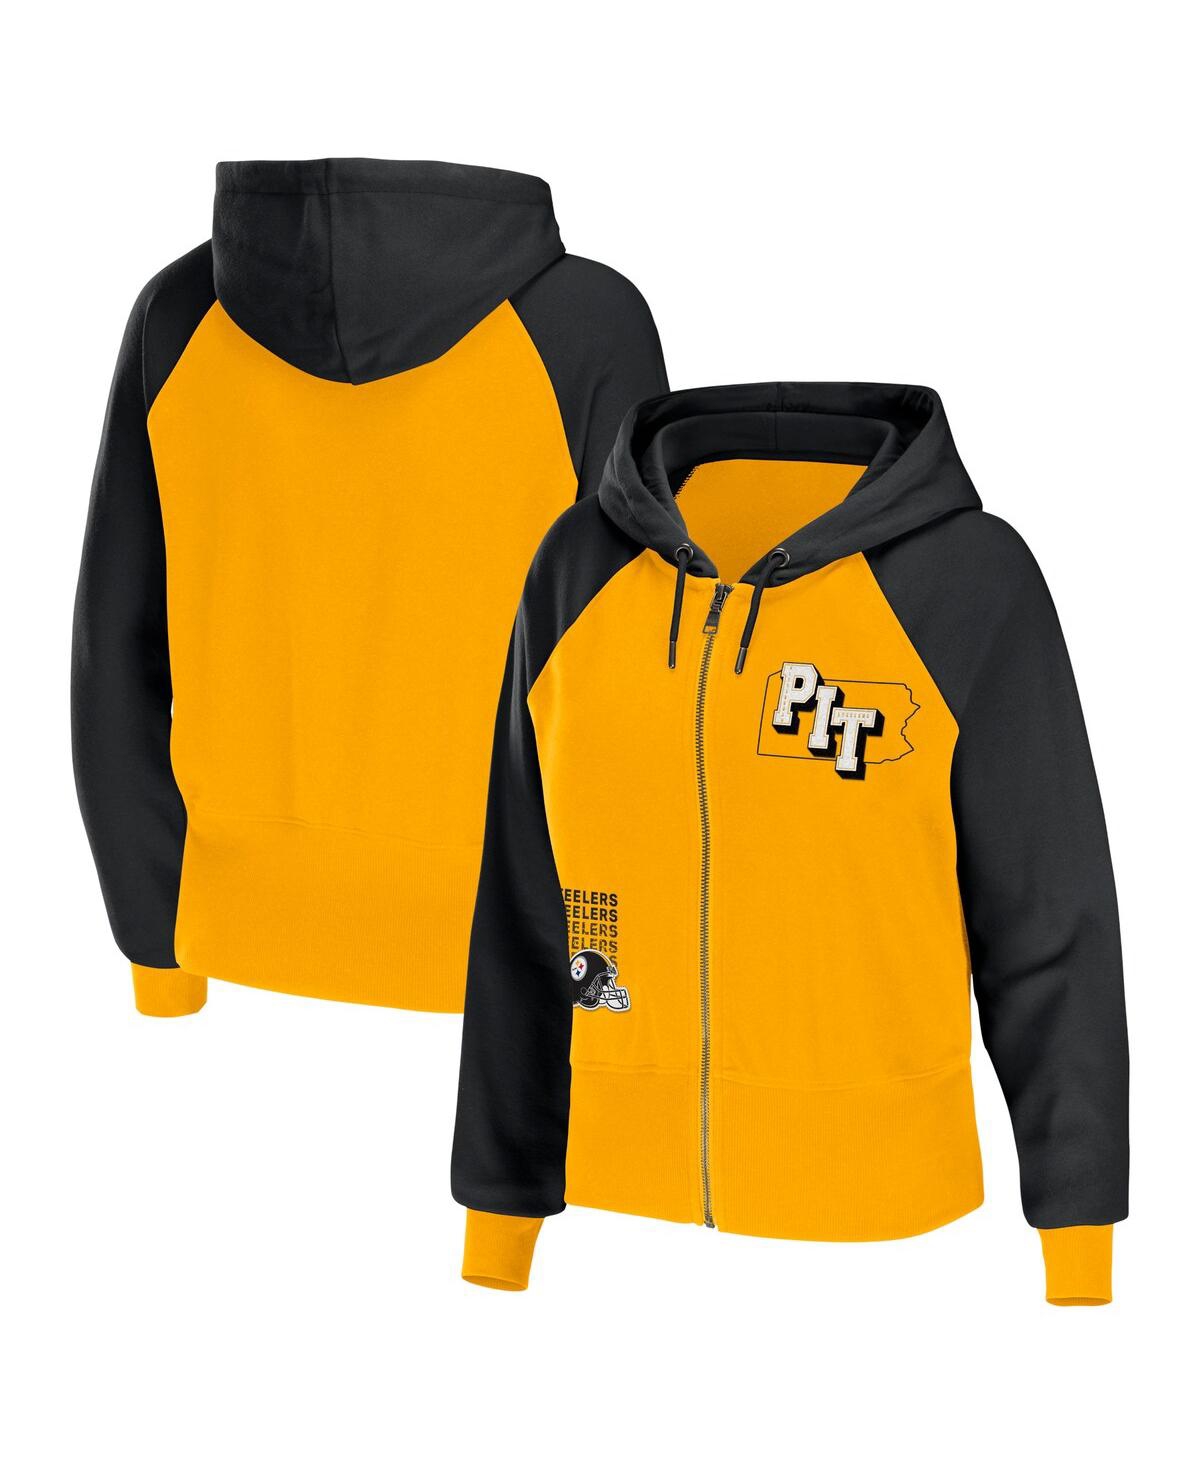 Shop Wear By Erin Andrews Women's  Gold Pittsburgh Steelers Colorblock Full-zip Hoodie